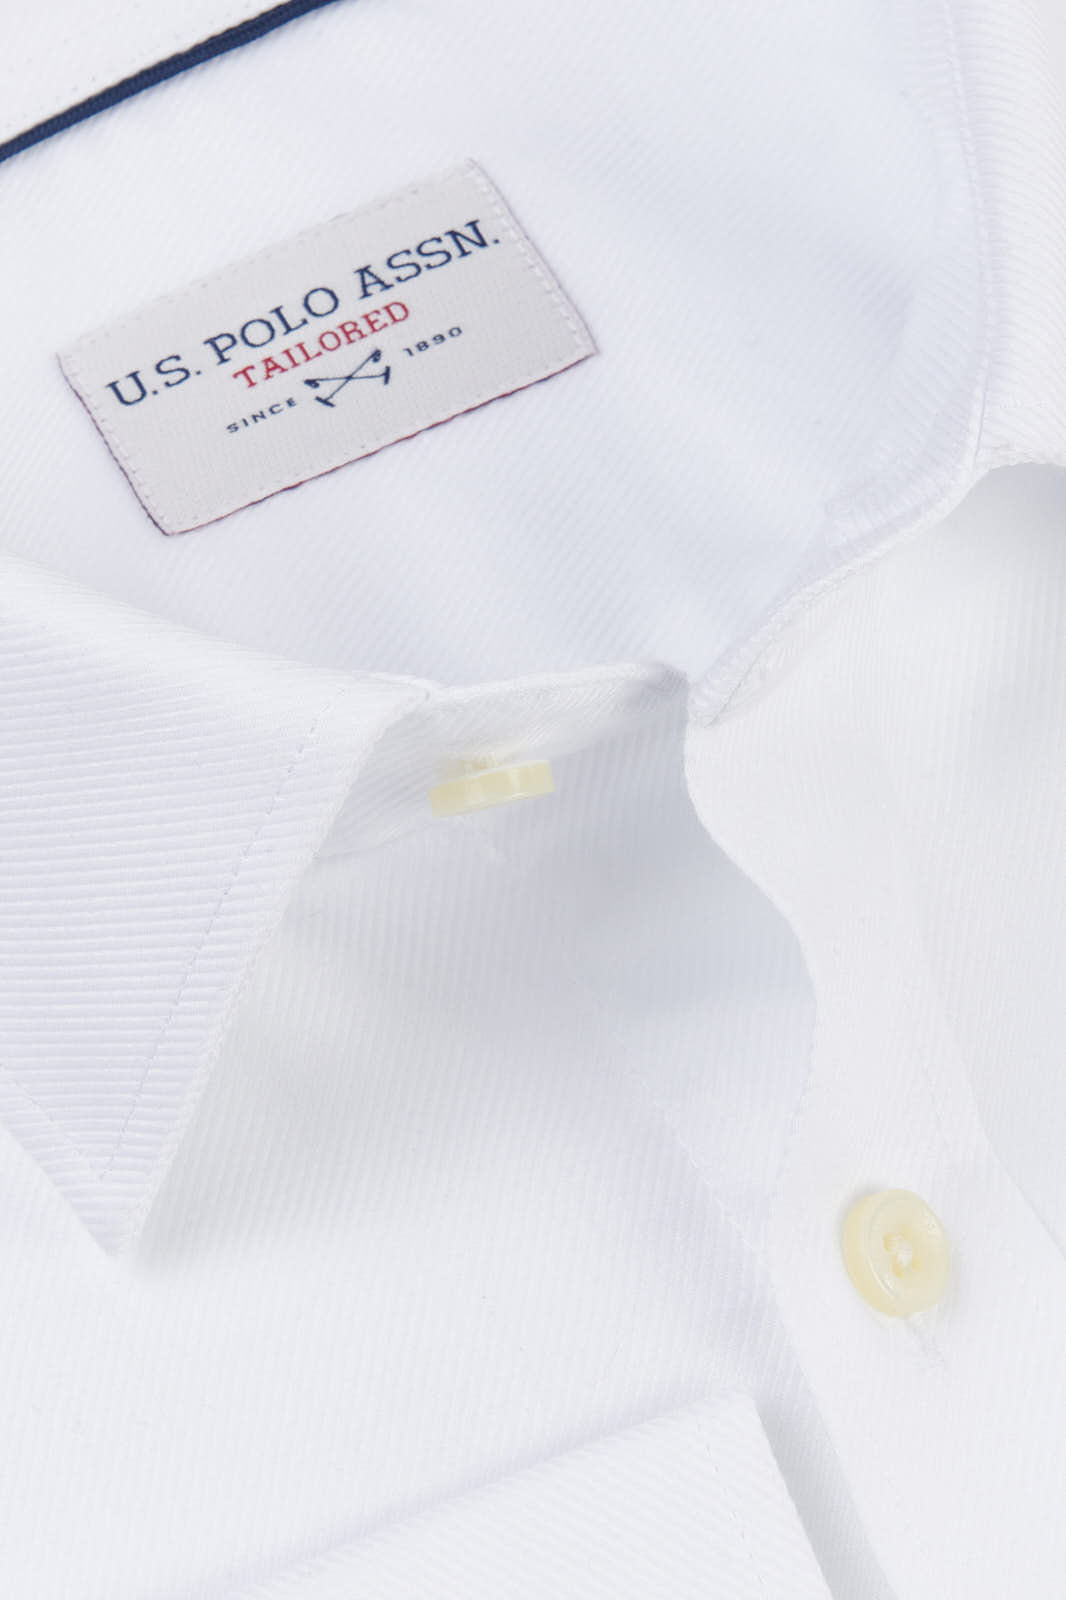 Mens Long Sleeve Royal Twill Shirt in White